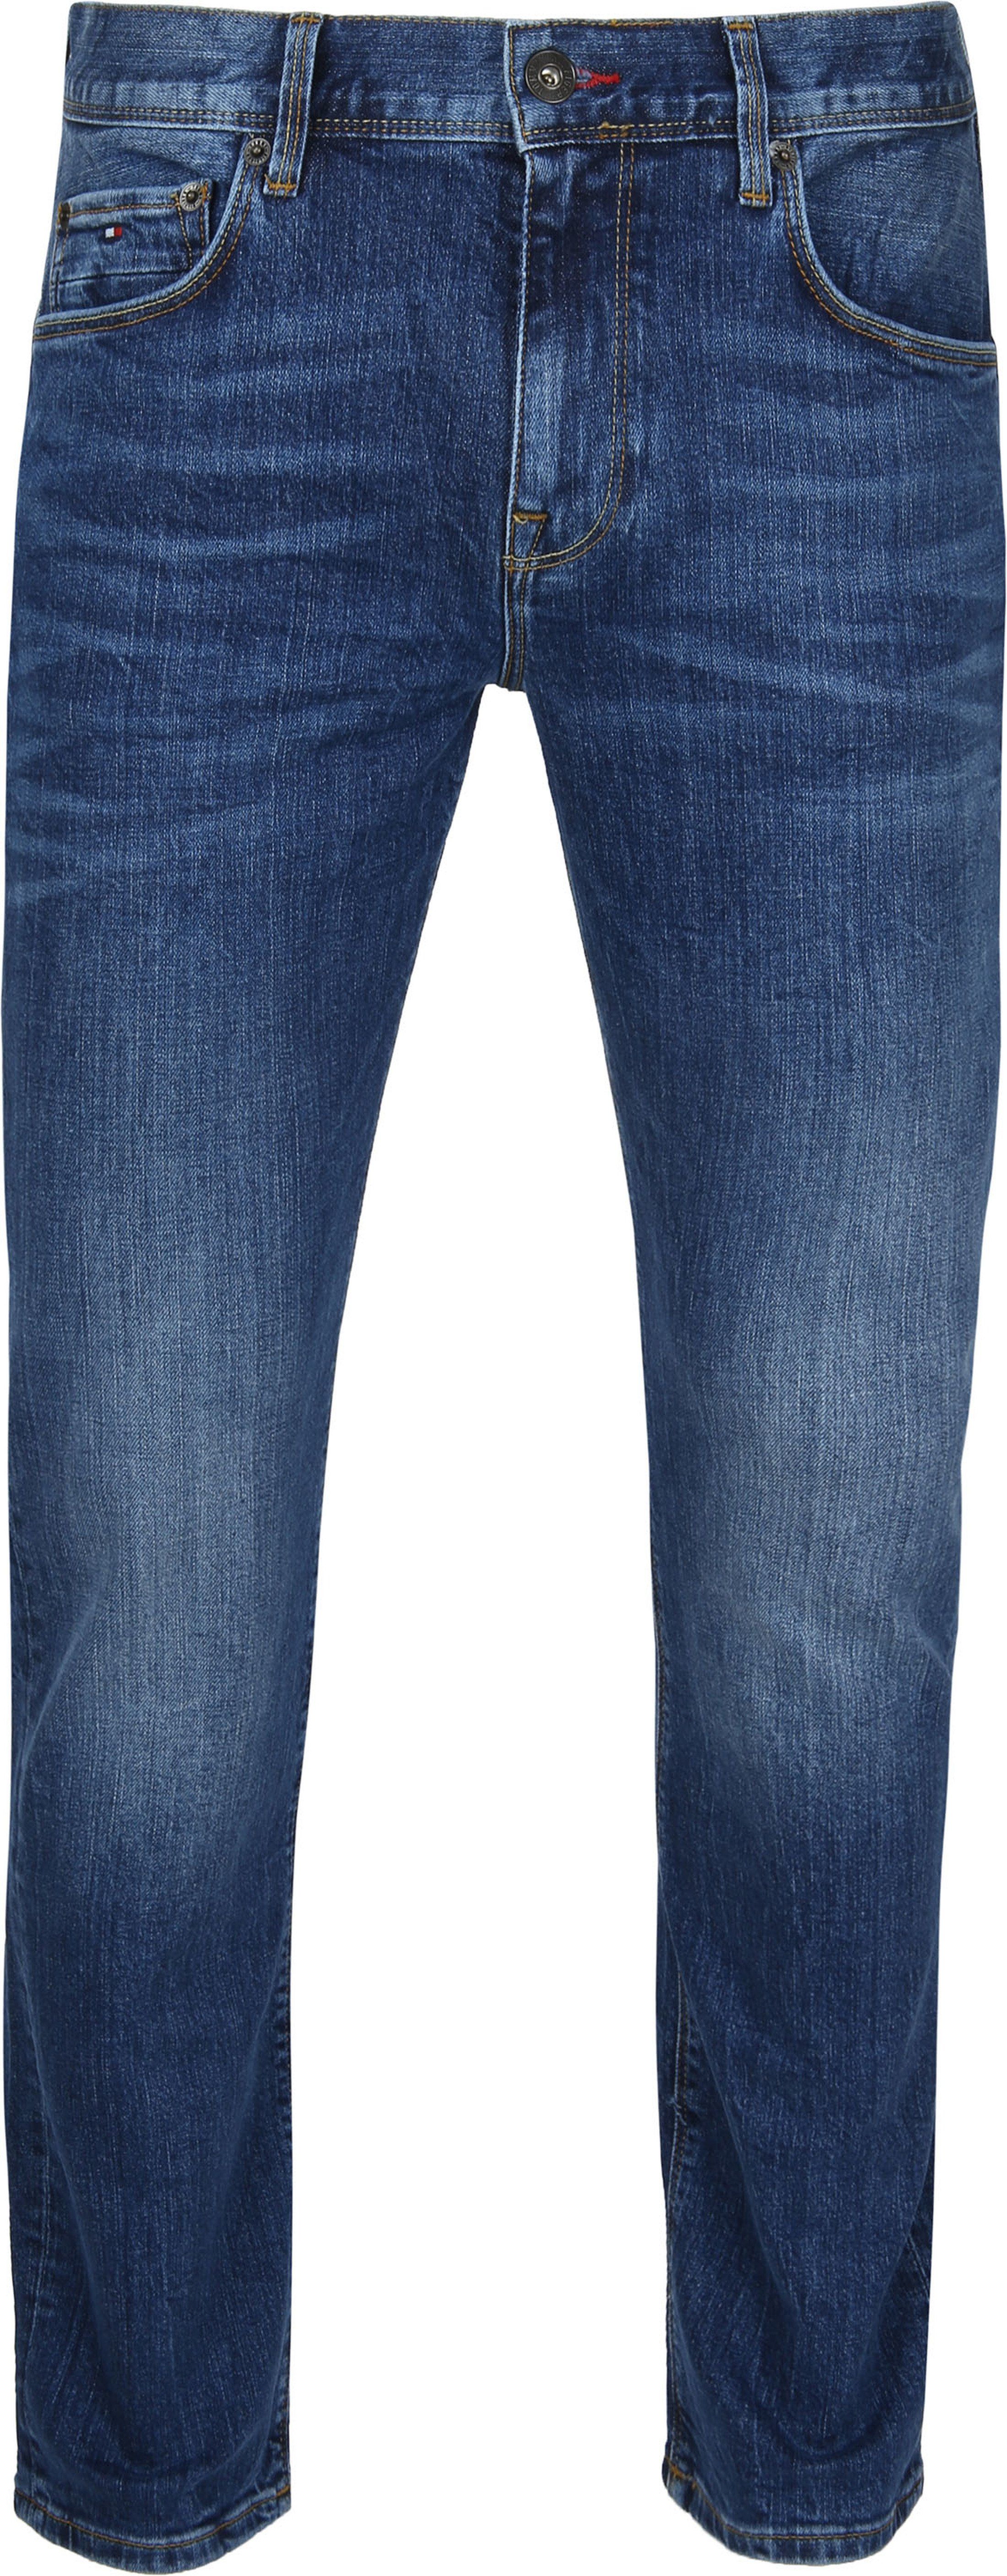 Tommy Hilfiger Core Denton Jeans Indigo Blue size W 31